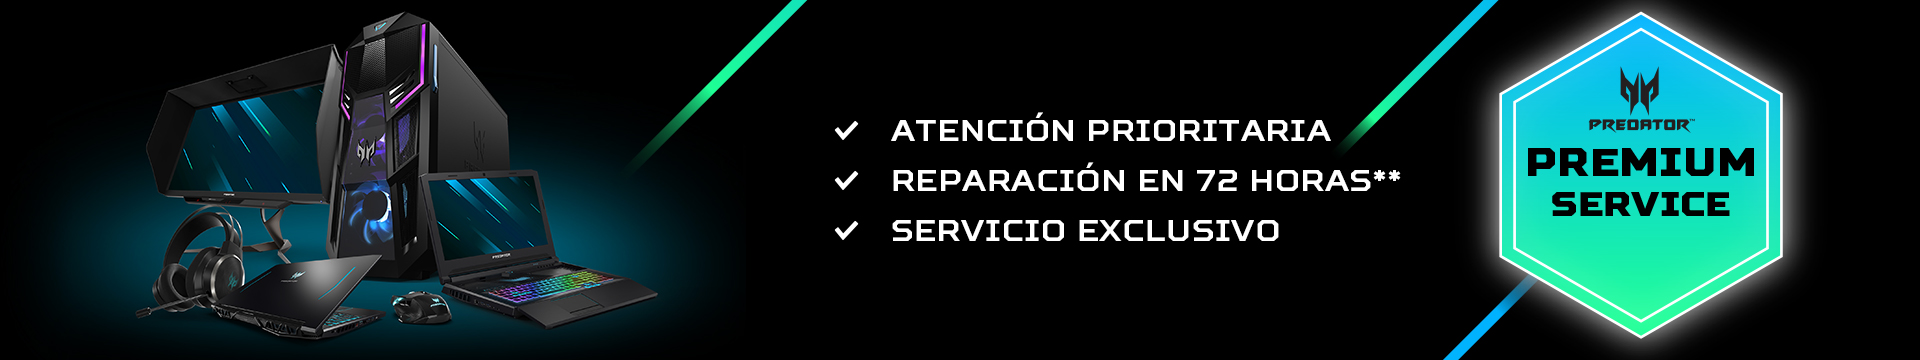 Predator Premium Service